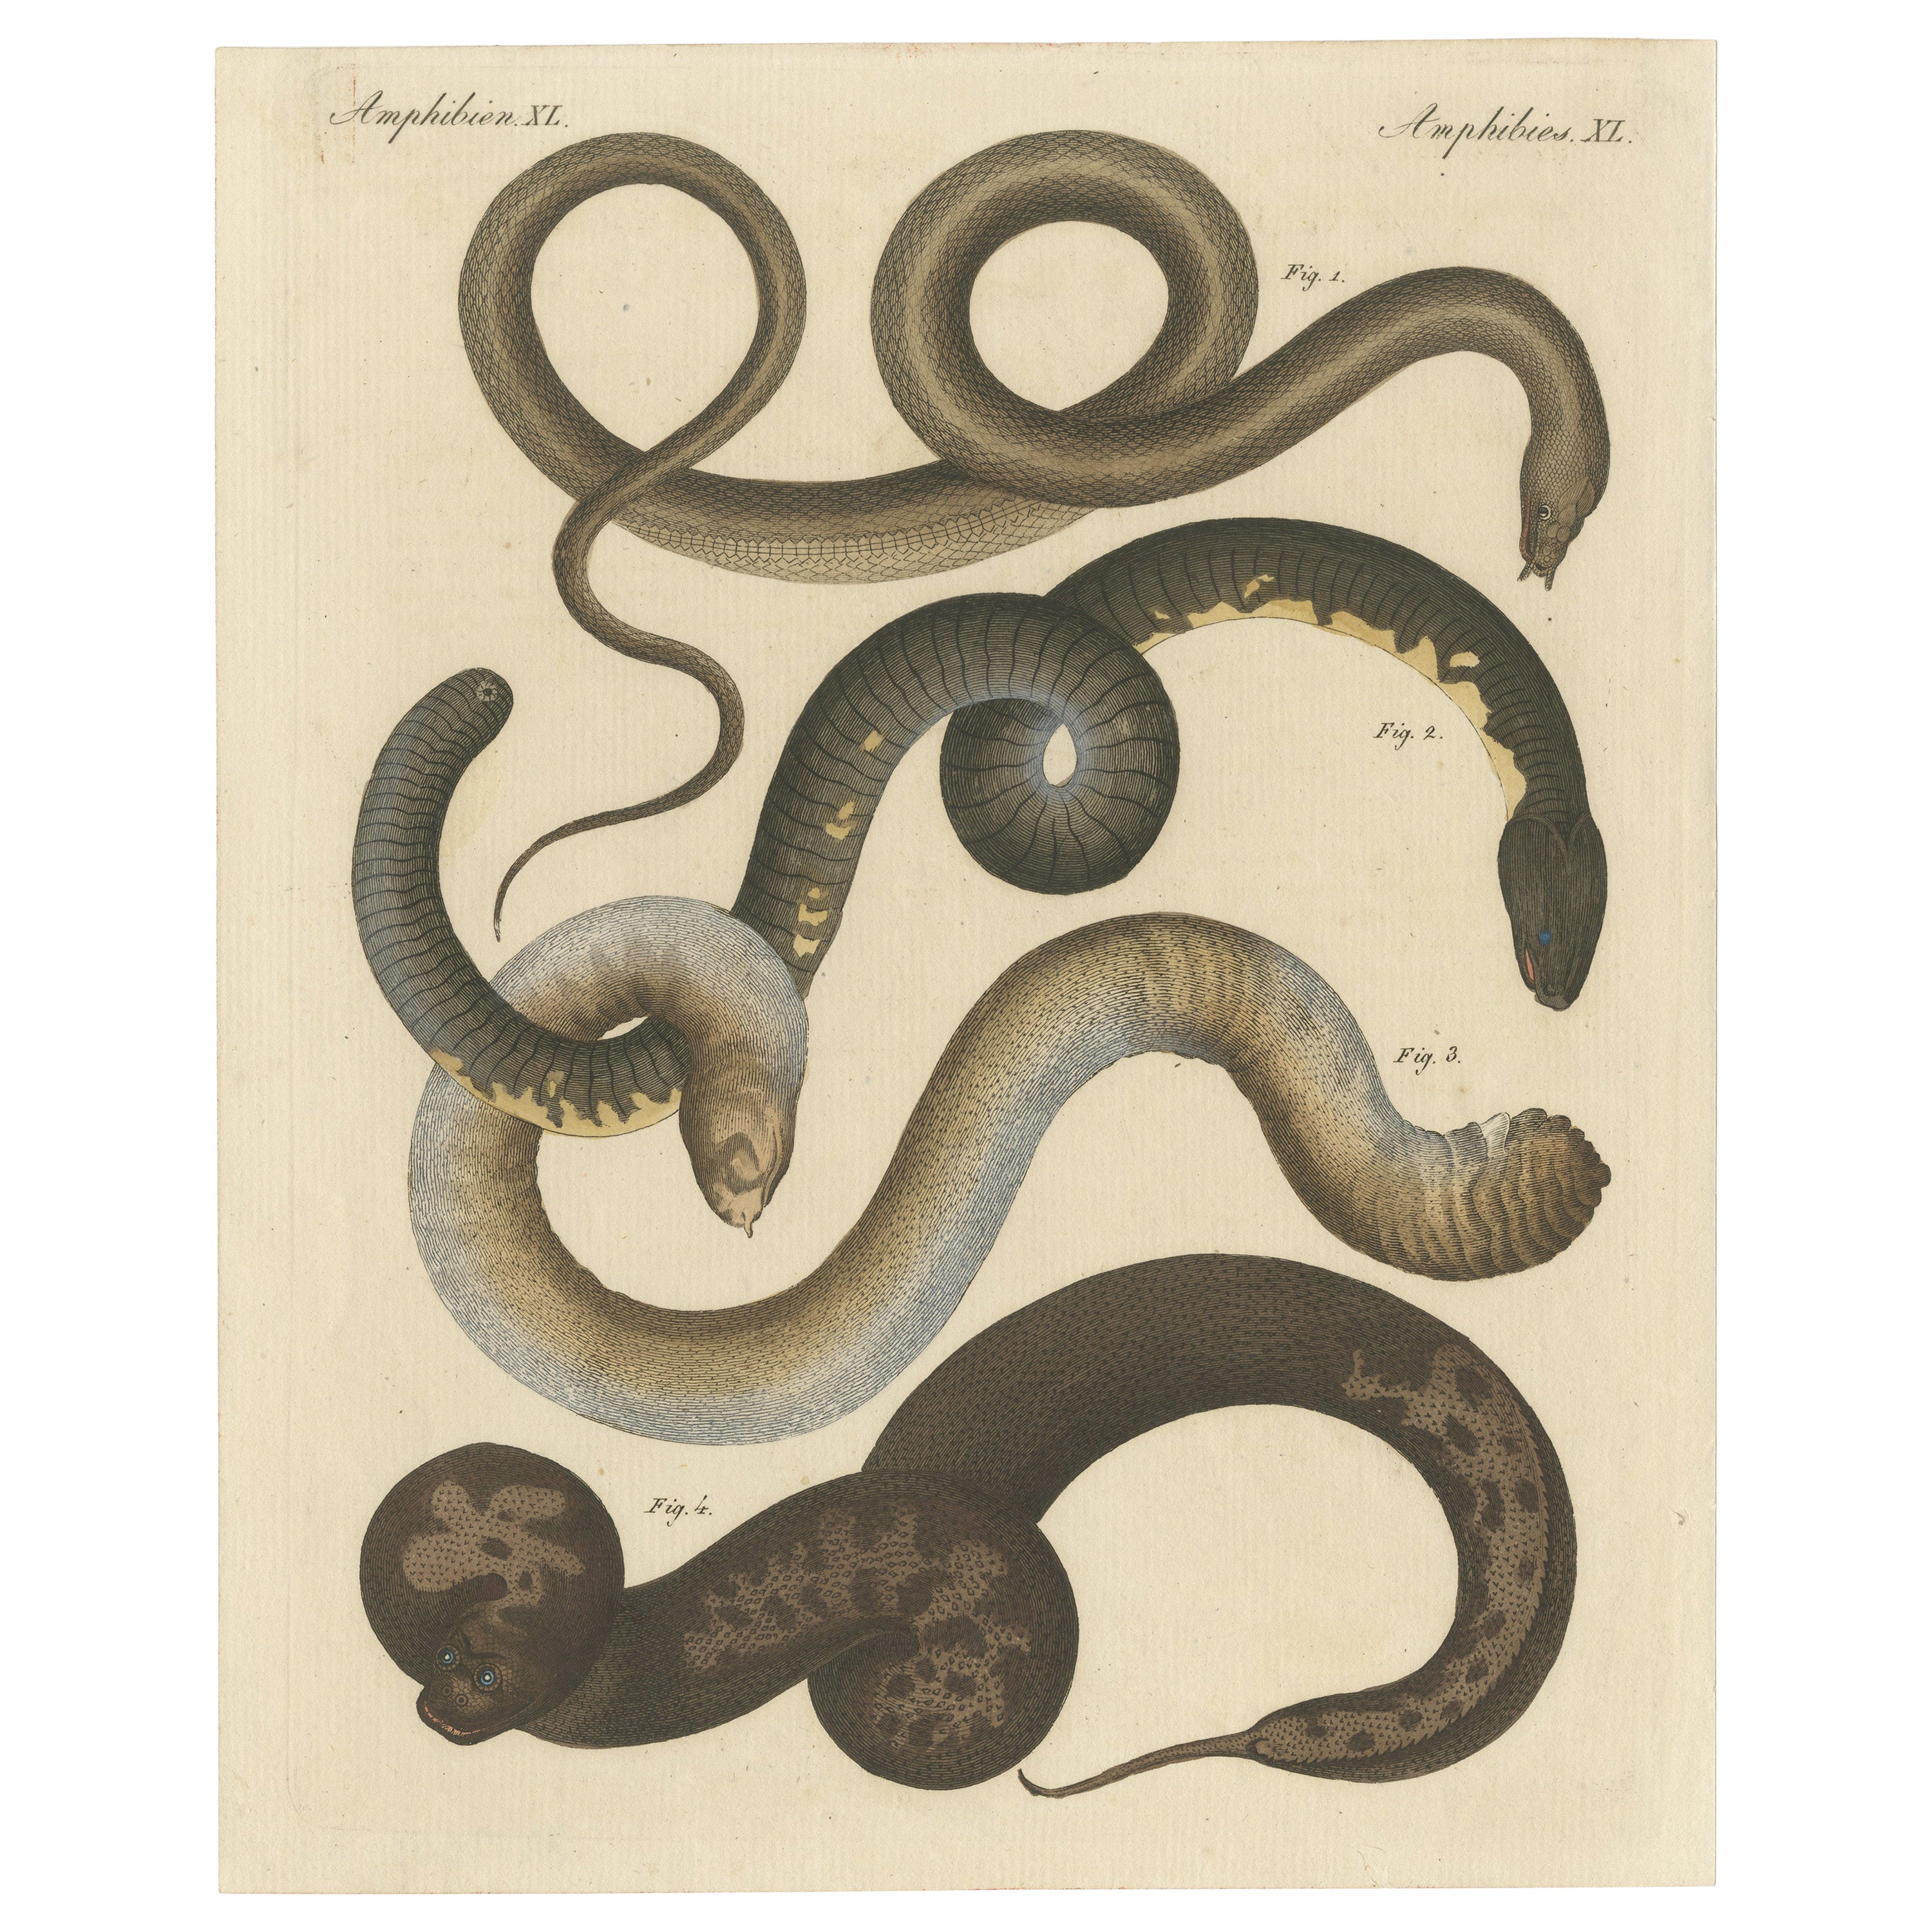 Original Antiker Druck verschiedener Schlangen und Kamelienexemplare